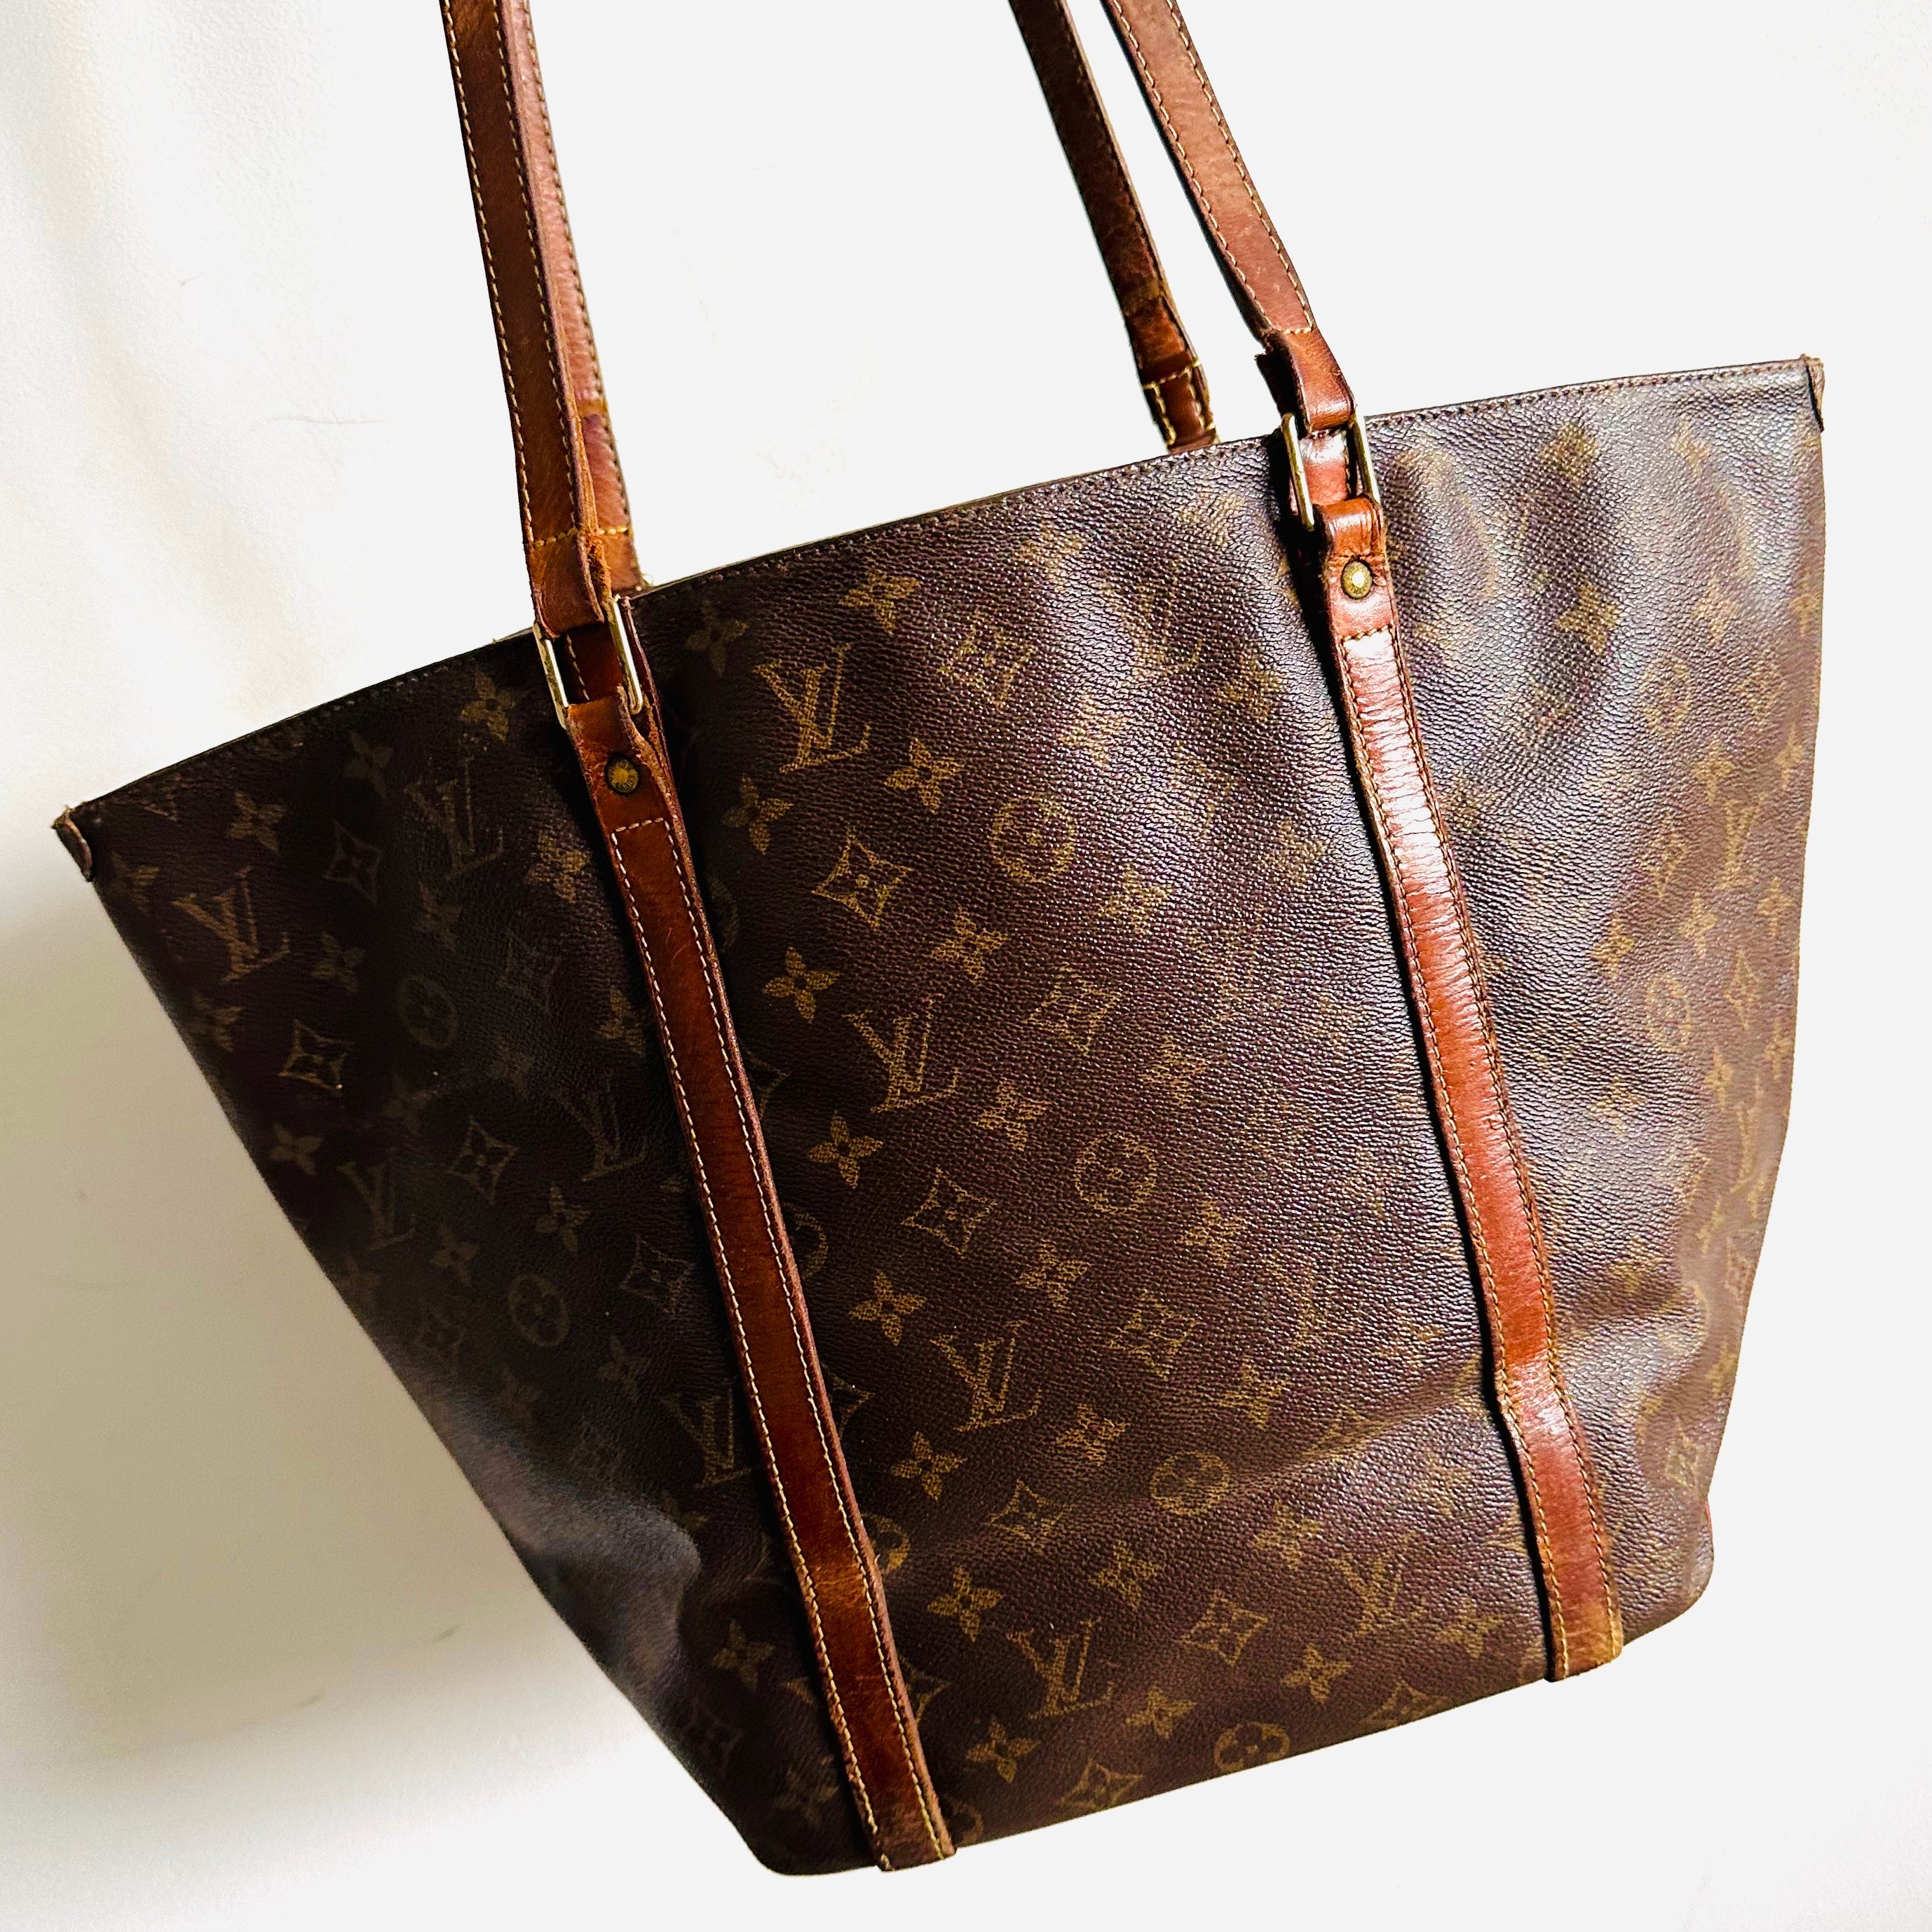 Authentic LOUIS VUITTON Sac Shopping Tote Monogram Shoulder Bag #45229